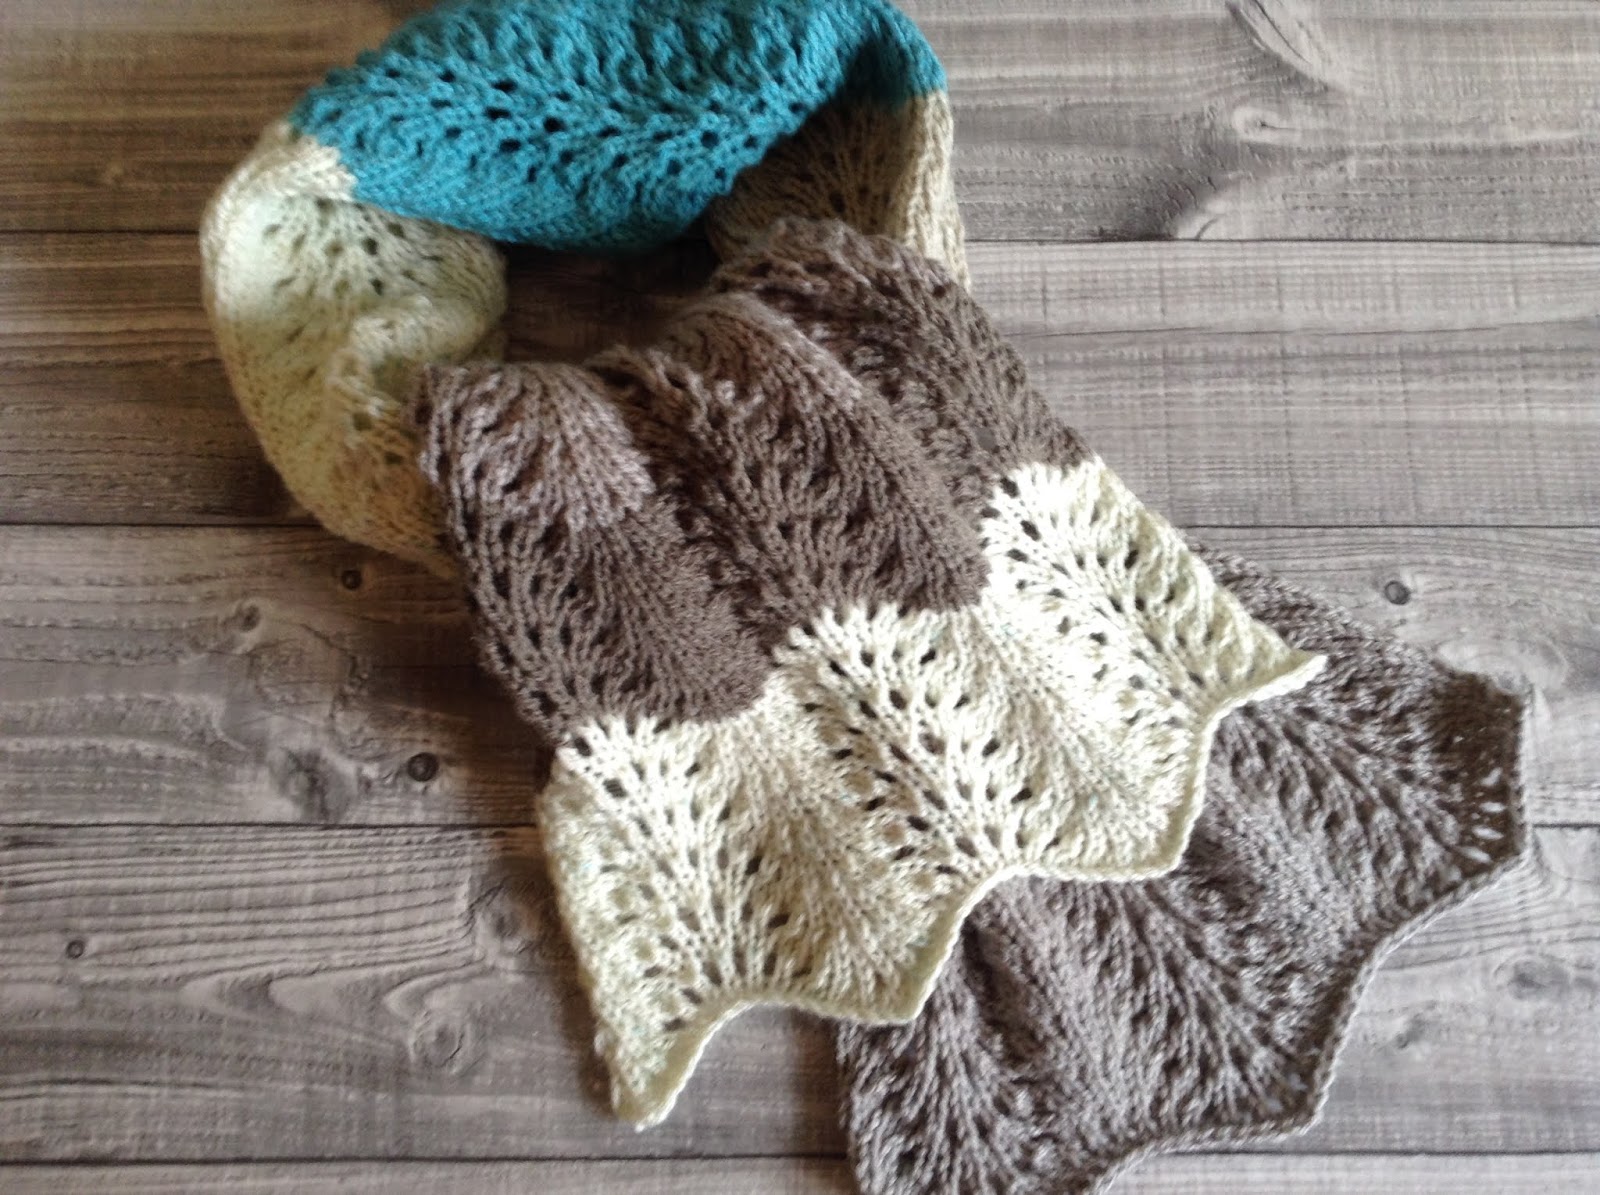 Yarn Cakes Shetland Lace Scarf Knitting pattern by Lullaby Lodge